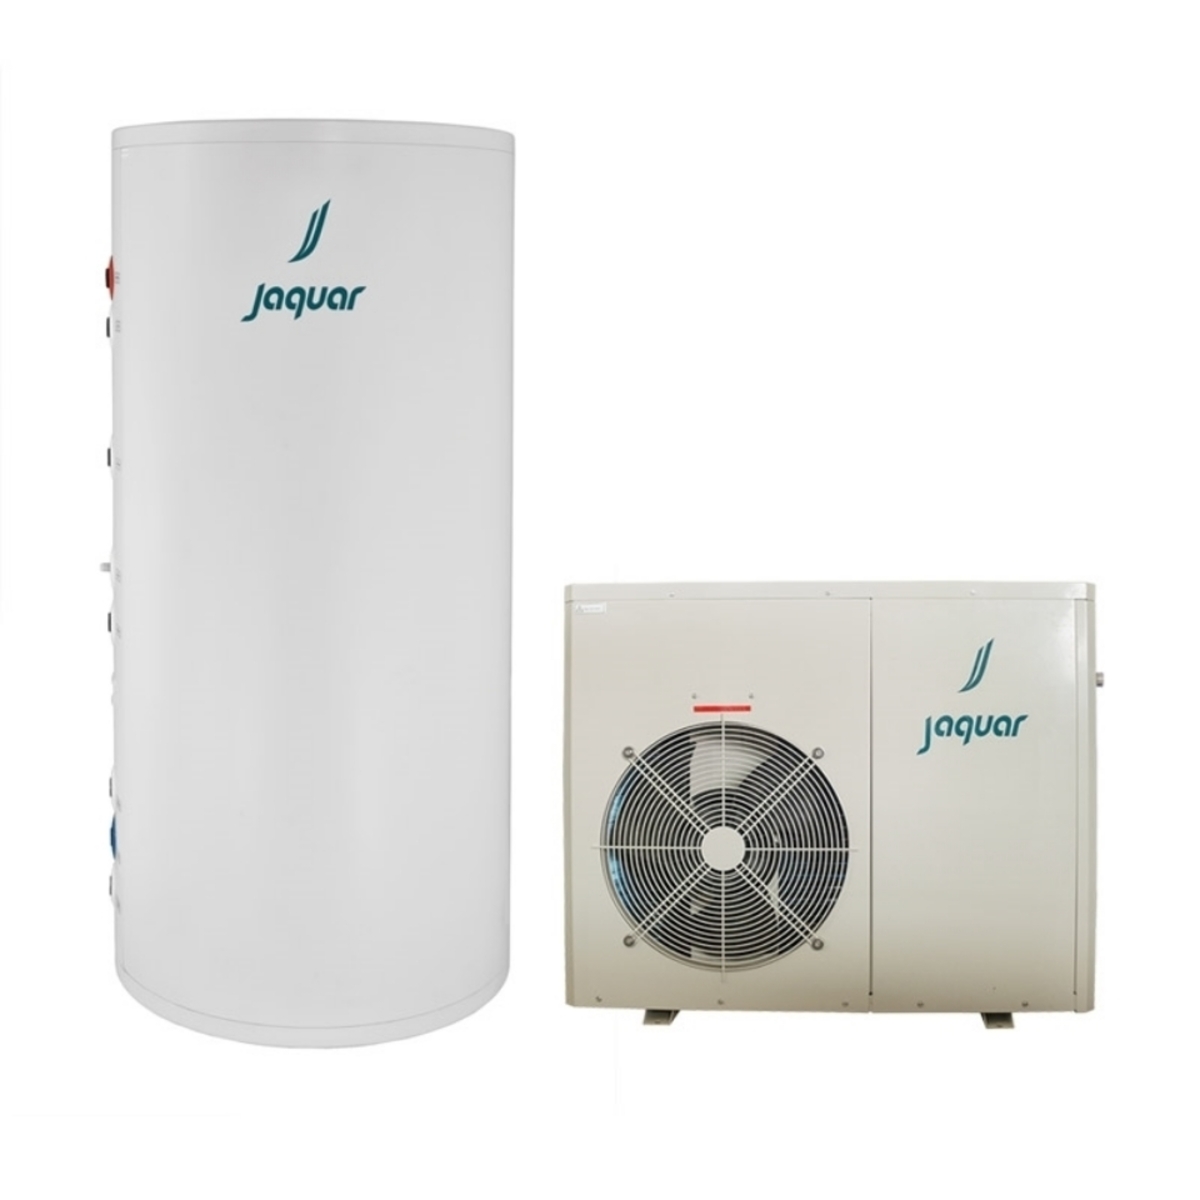 Jaquar integra split heat pump